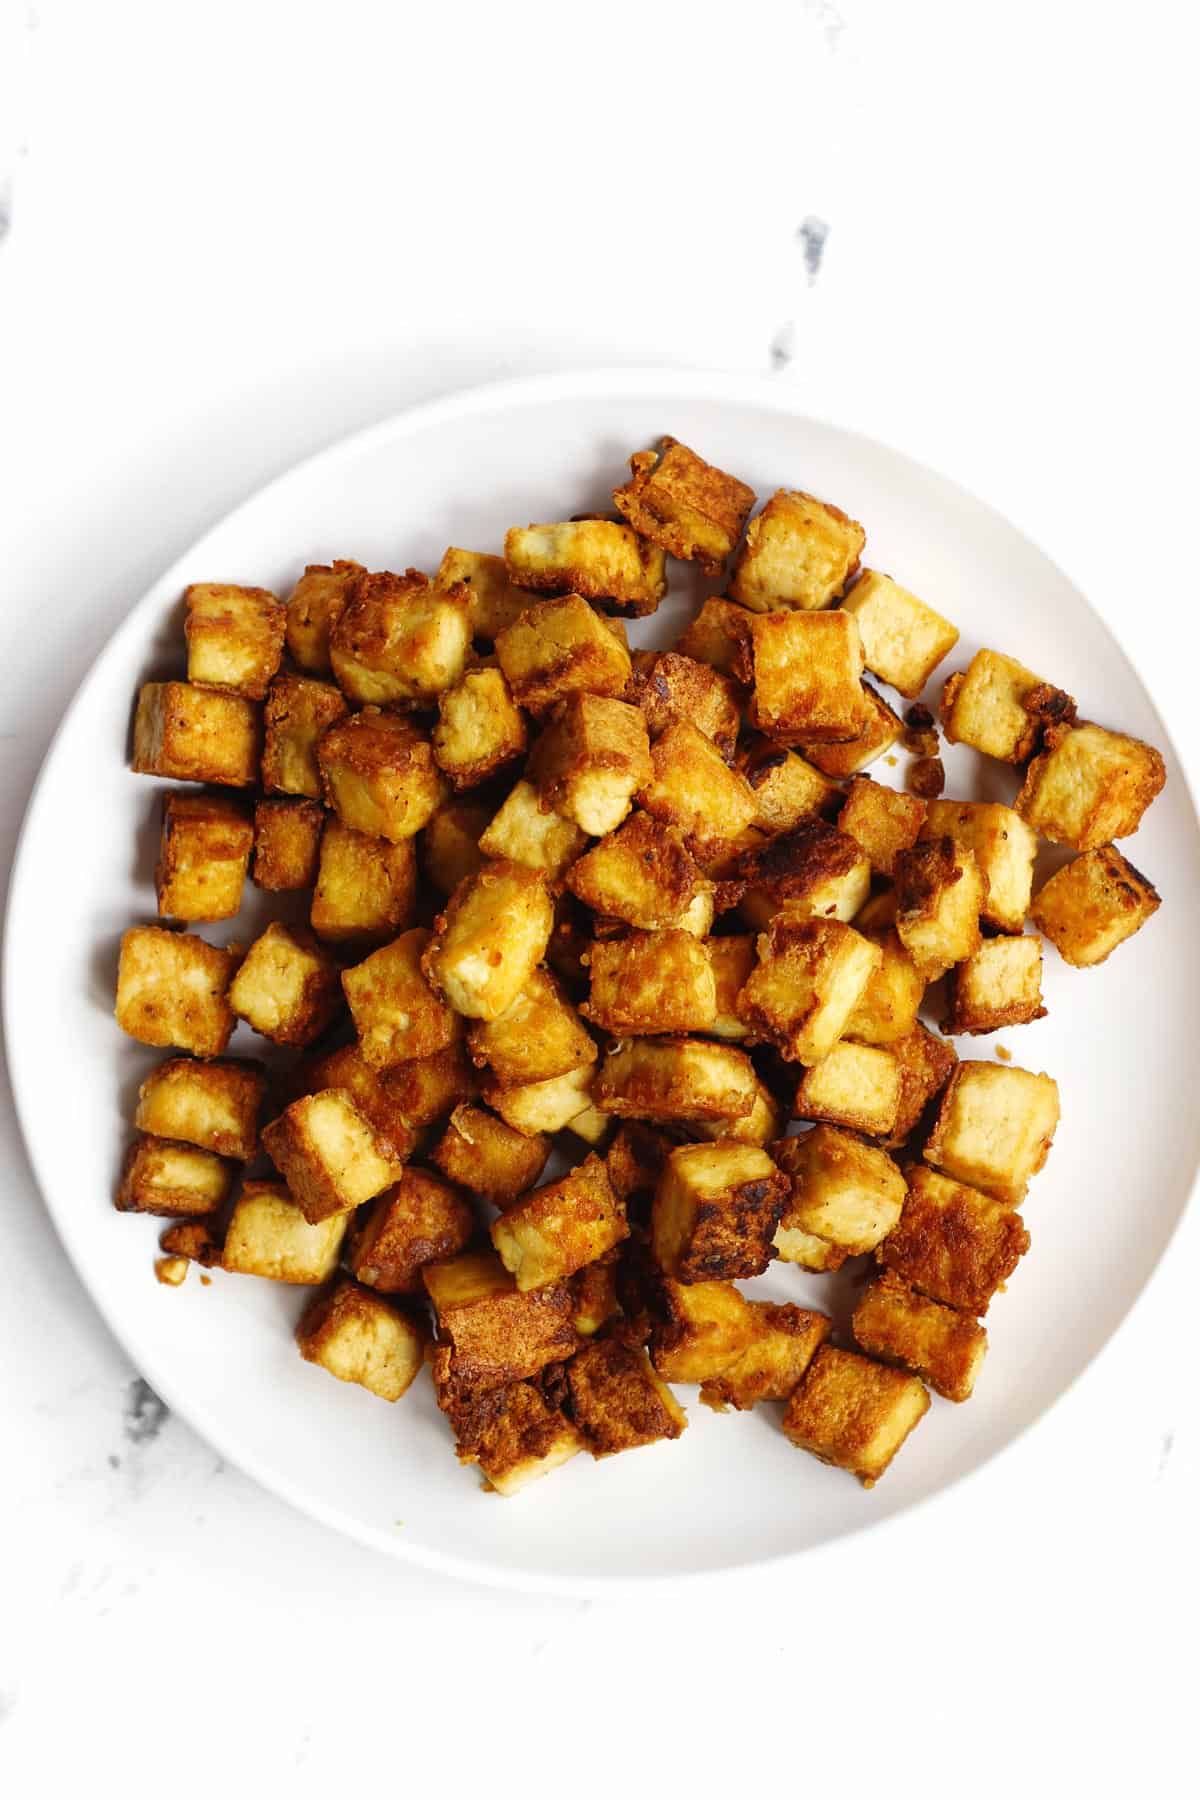 A photo of crispy tofu cubes on a white plate.